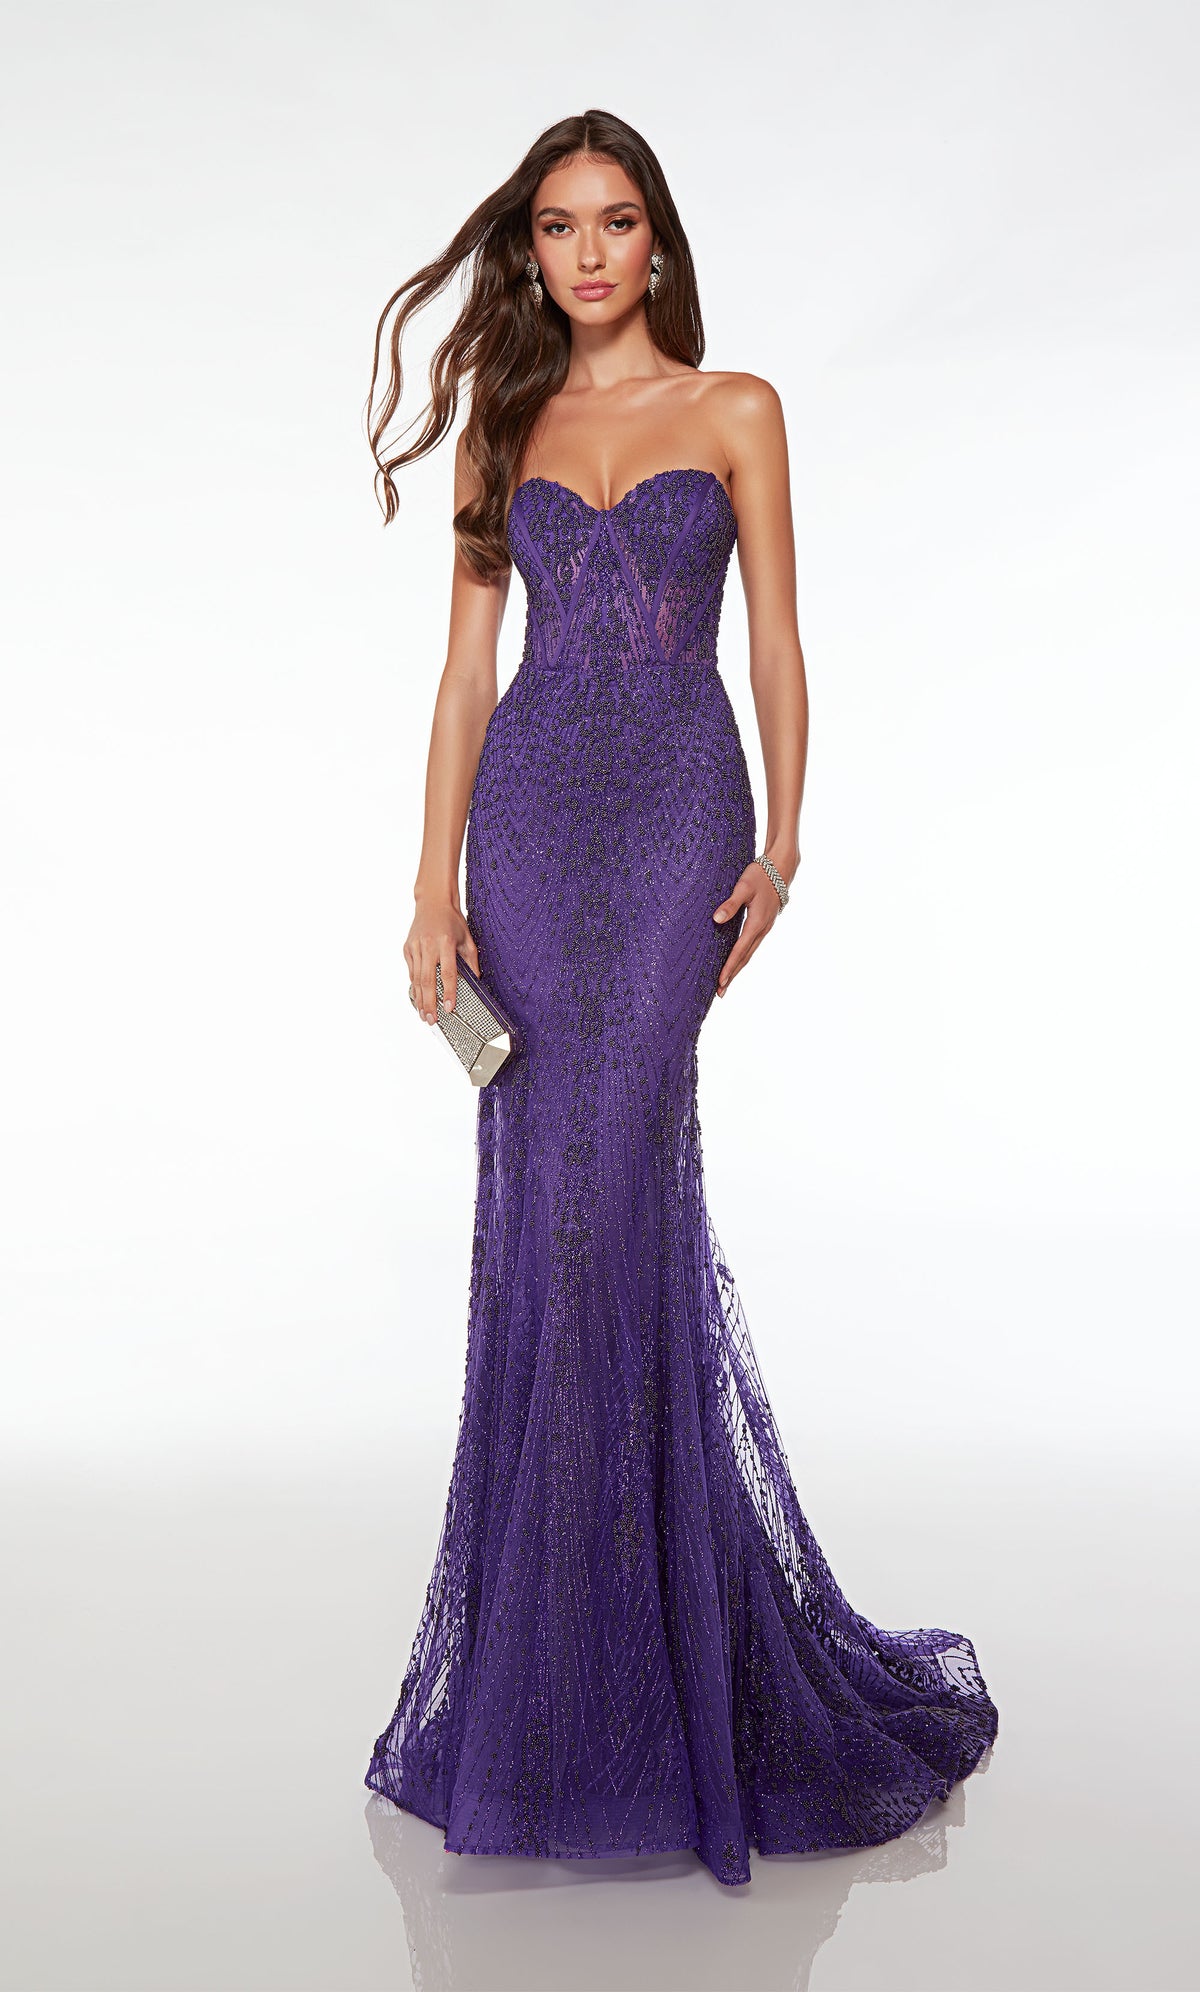 Purple corset mermaid dress: strapless, lace-up back, train, beaded-glitter tulle fabric—stylish and glamorous.